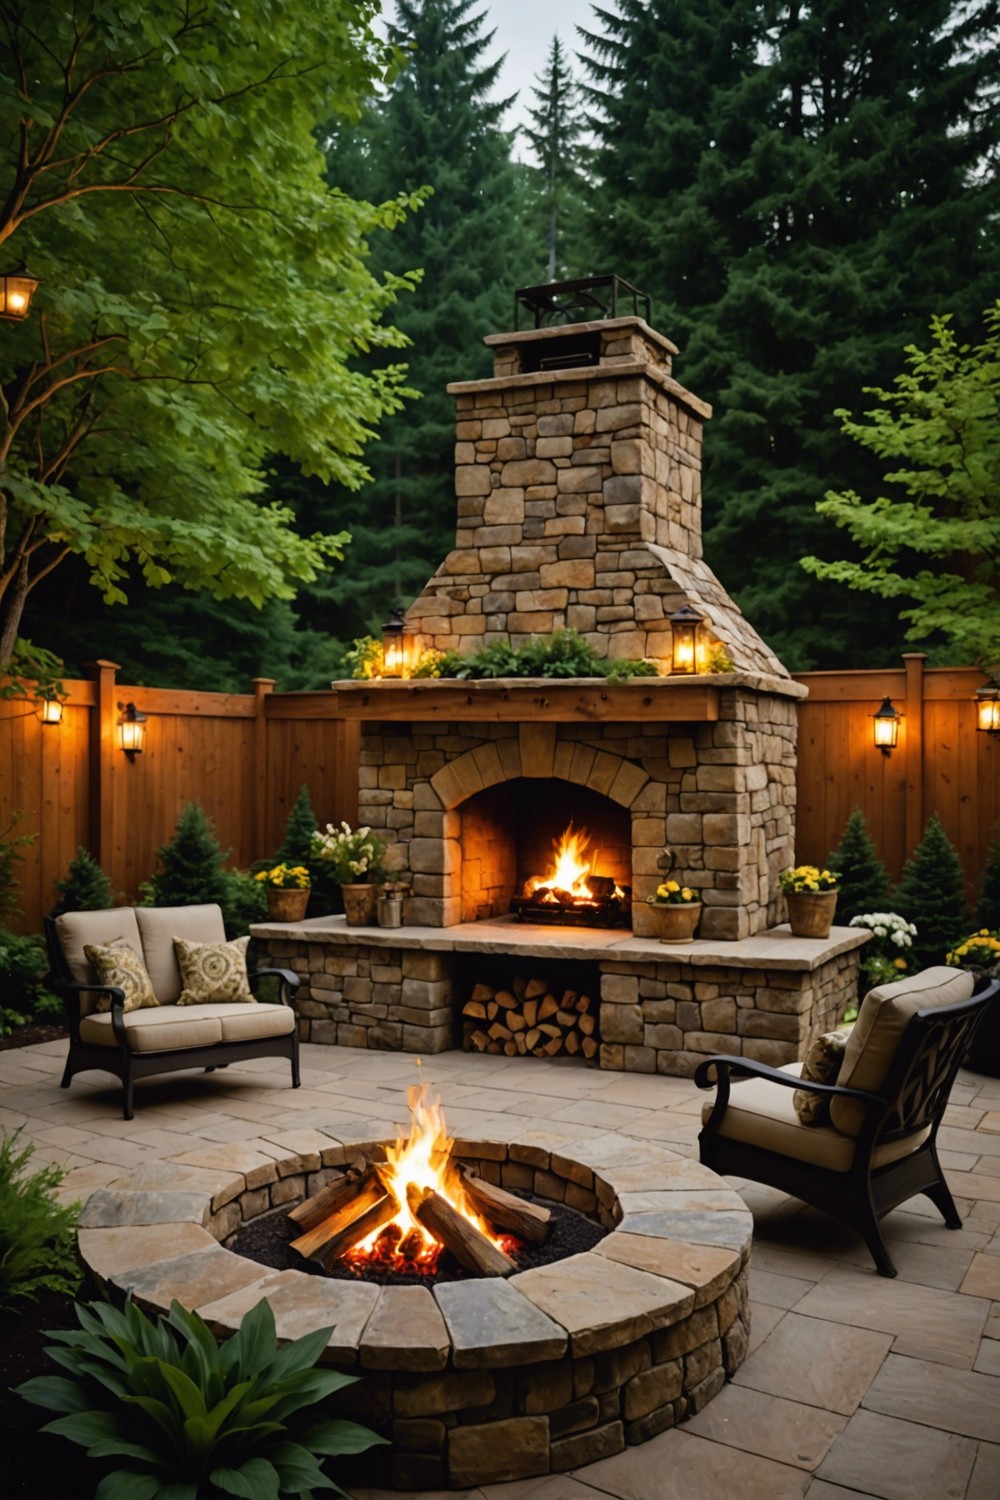 Rustic Stone Fireplace: